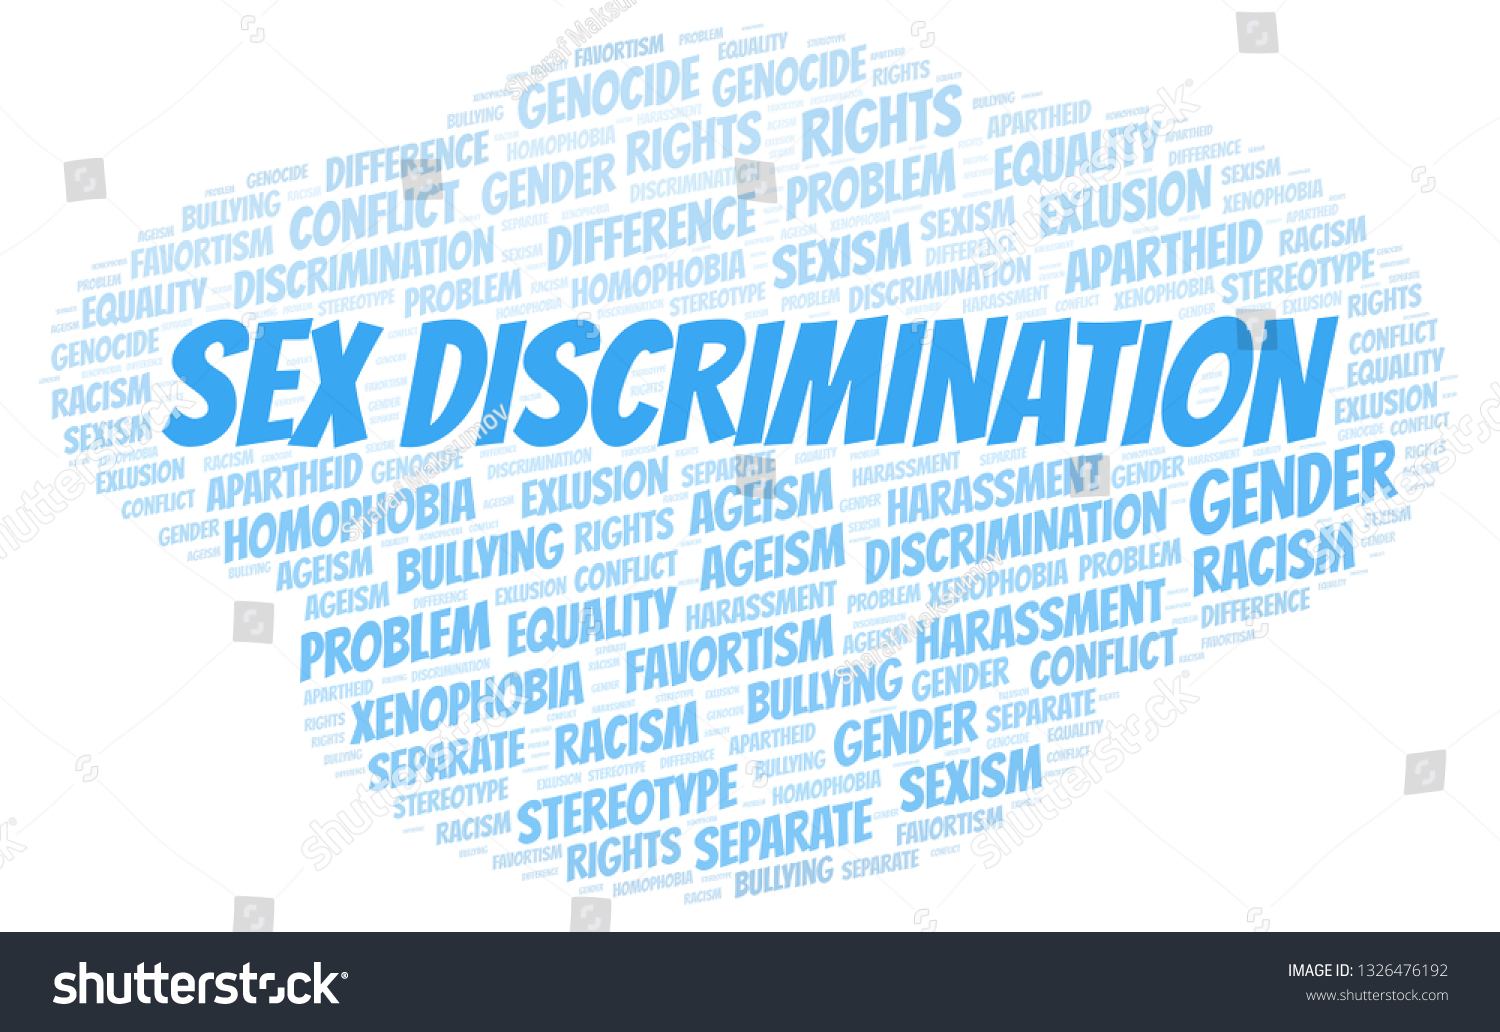 Sex Discrimination Type Discrimination Word Cloud Stock Illustration 1326476192 Shutterstock 1160